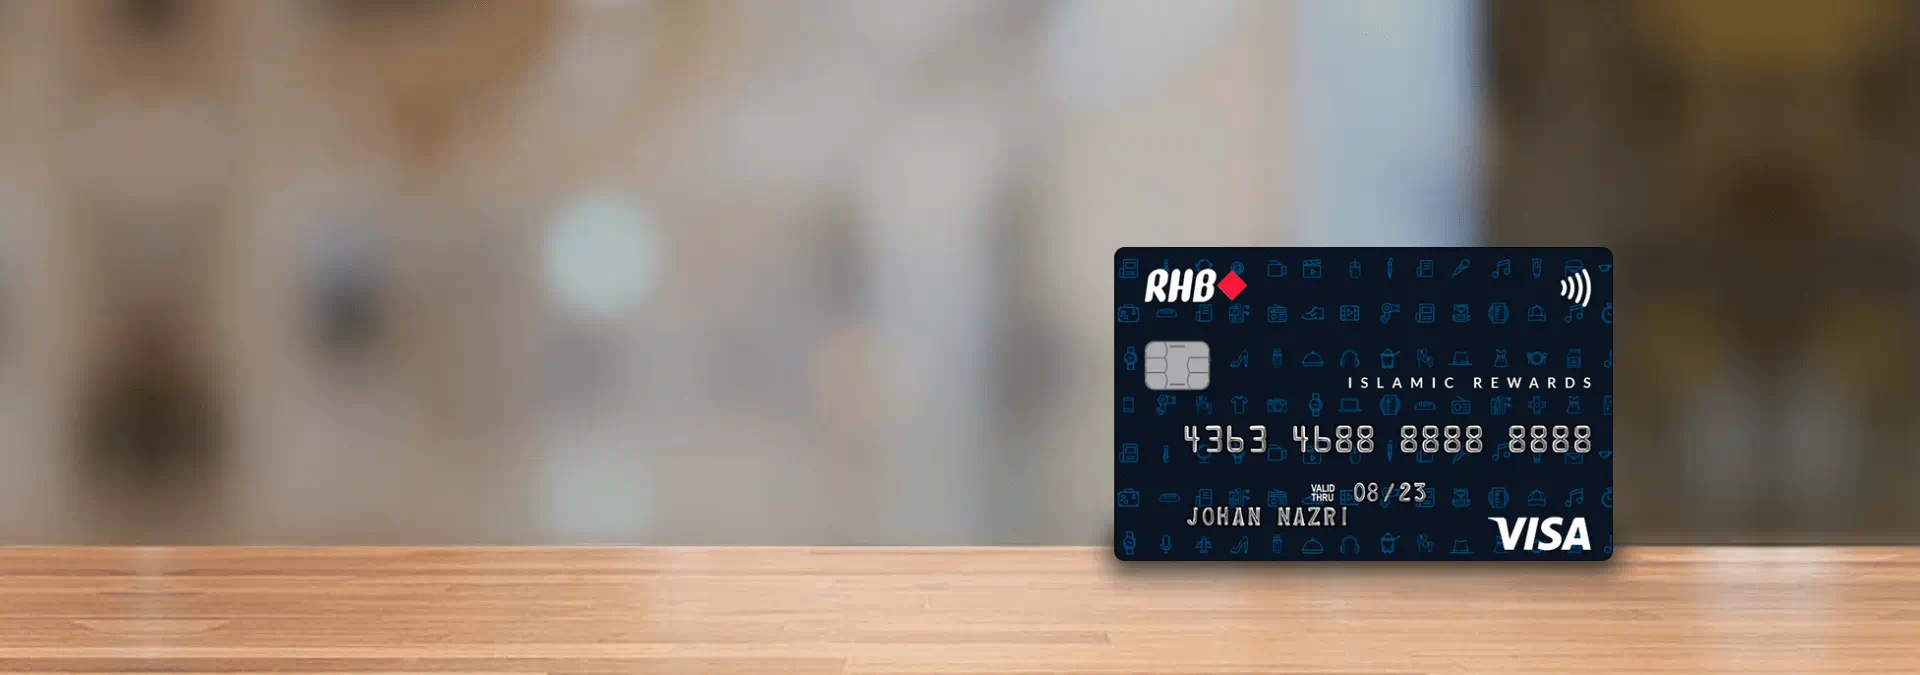 rhb-rewards-motion-code-credit-card-banner